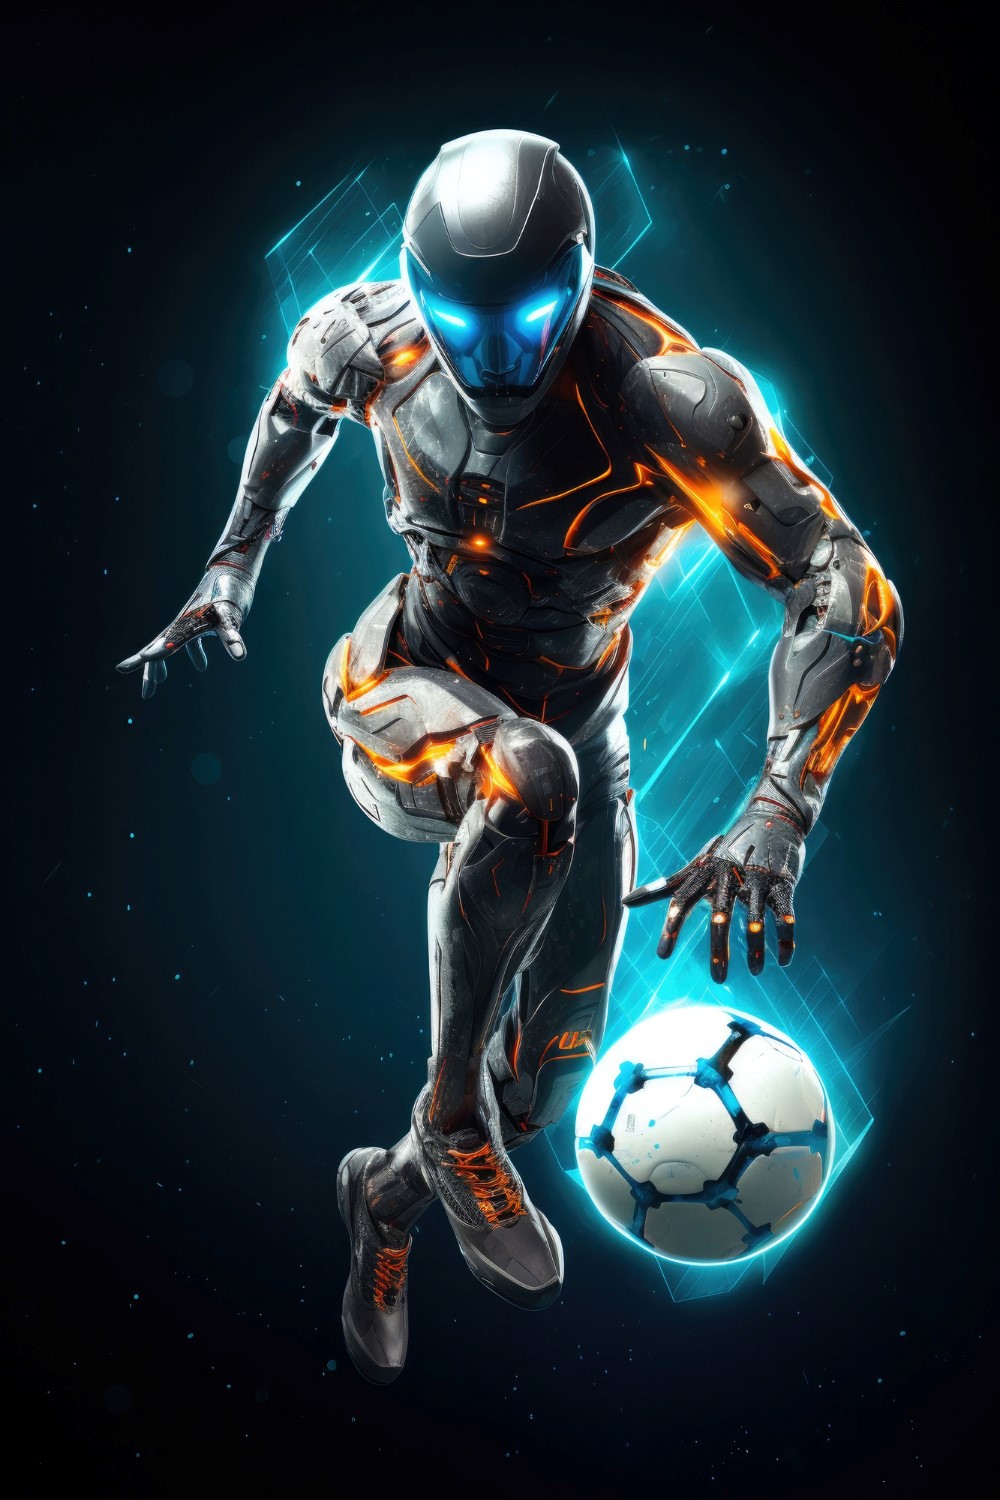 The Future of Football - AI and Data Analytics